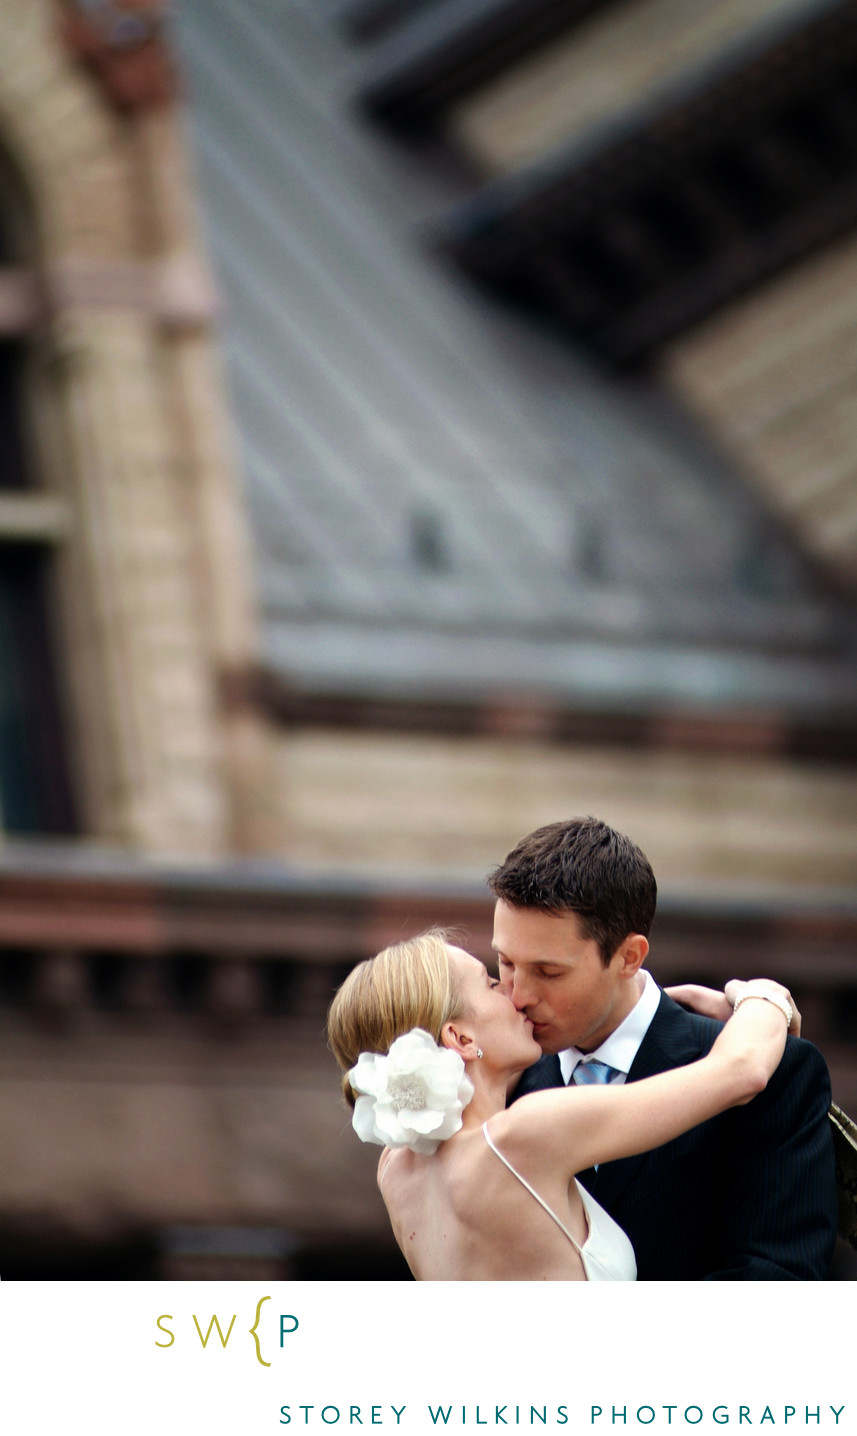 Toronto City Hall Wedding Photographer Adds Romance